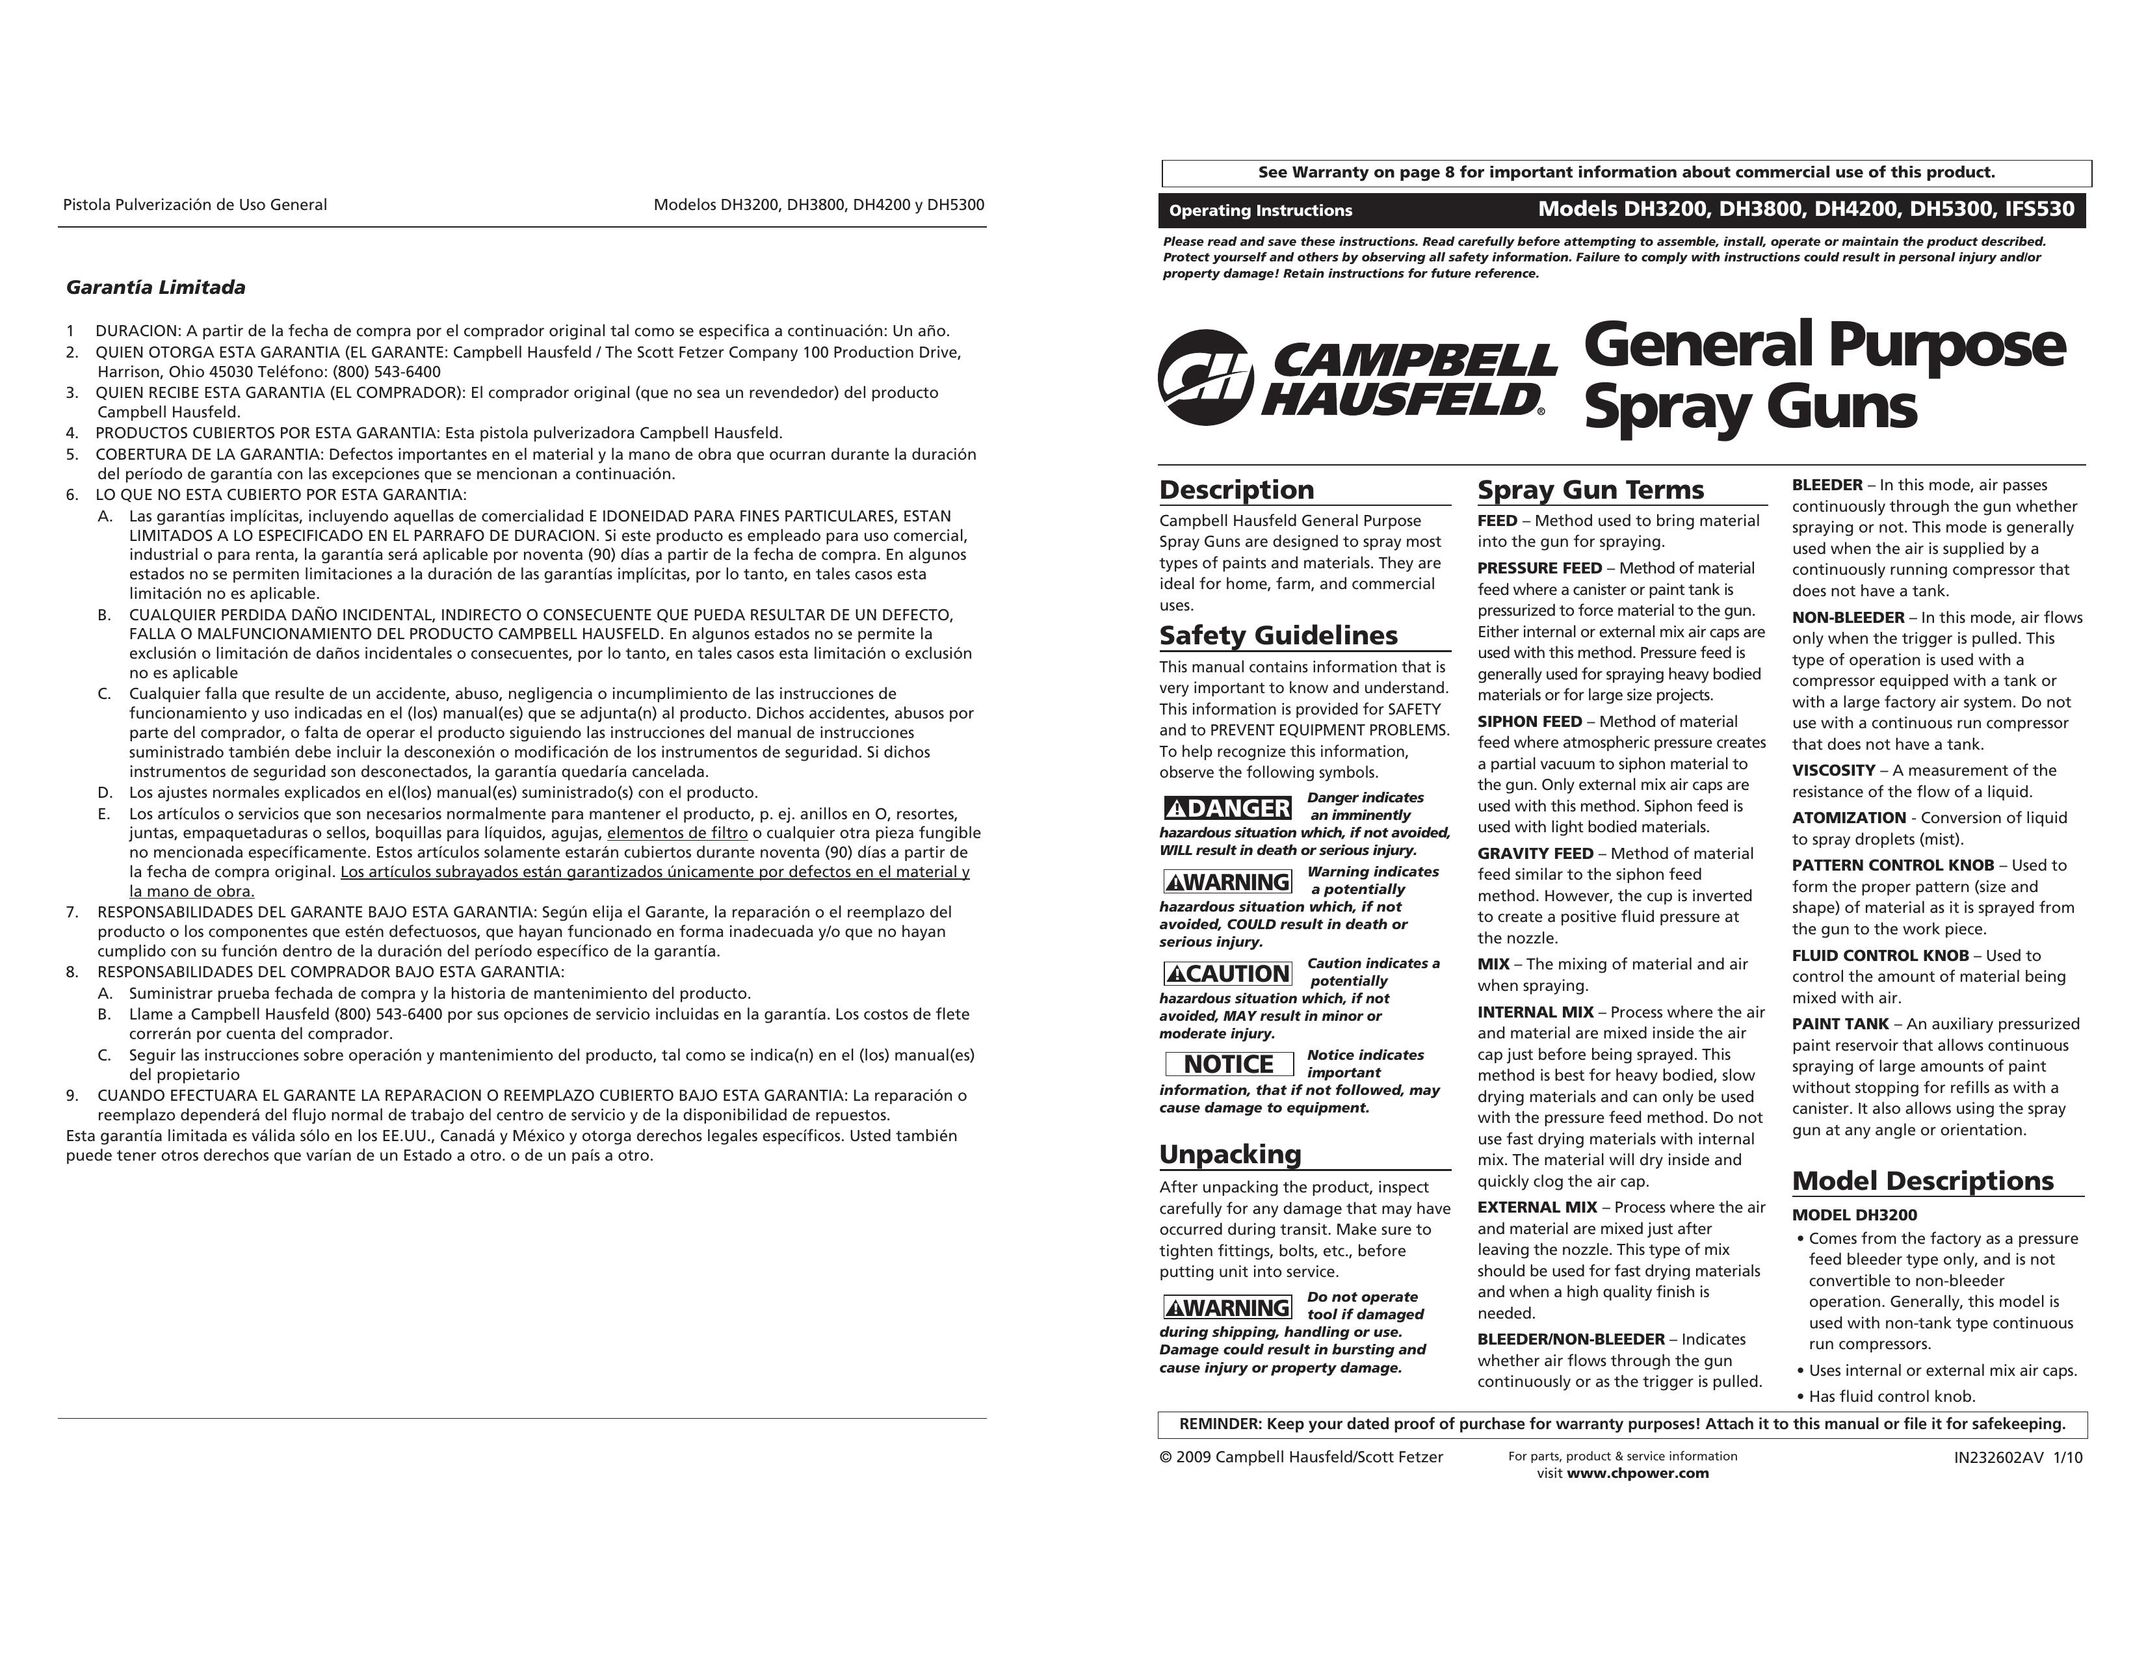 Campbell Hausfeld DH3800 Paint Sprayer User Manual